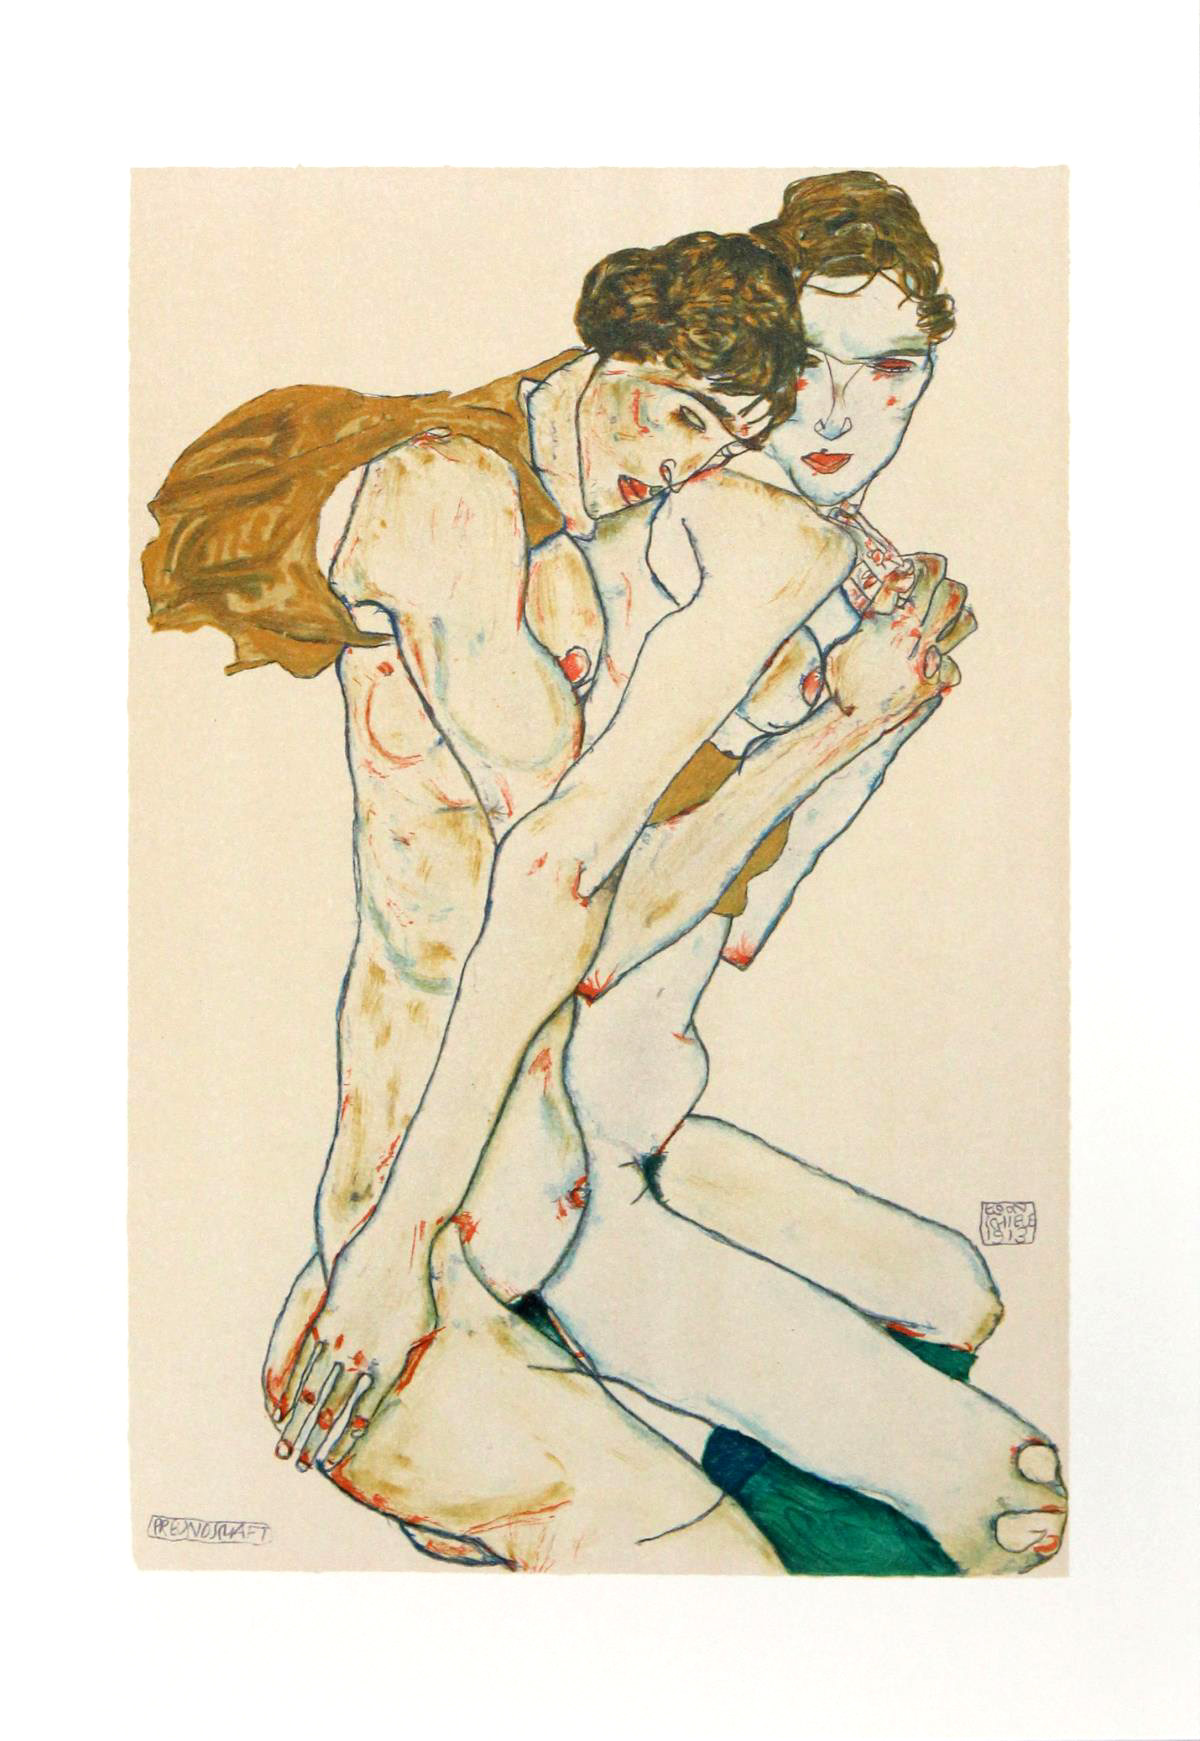 1981 Egon Schiele 17 Erotic Drawings Friendship